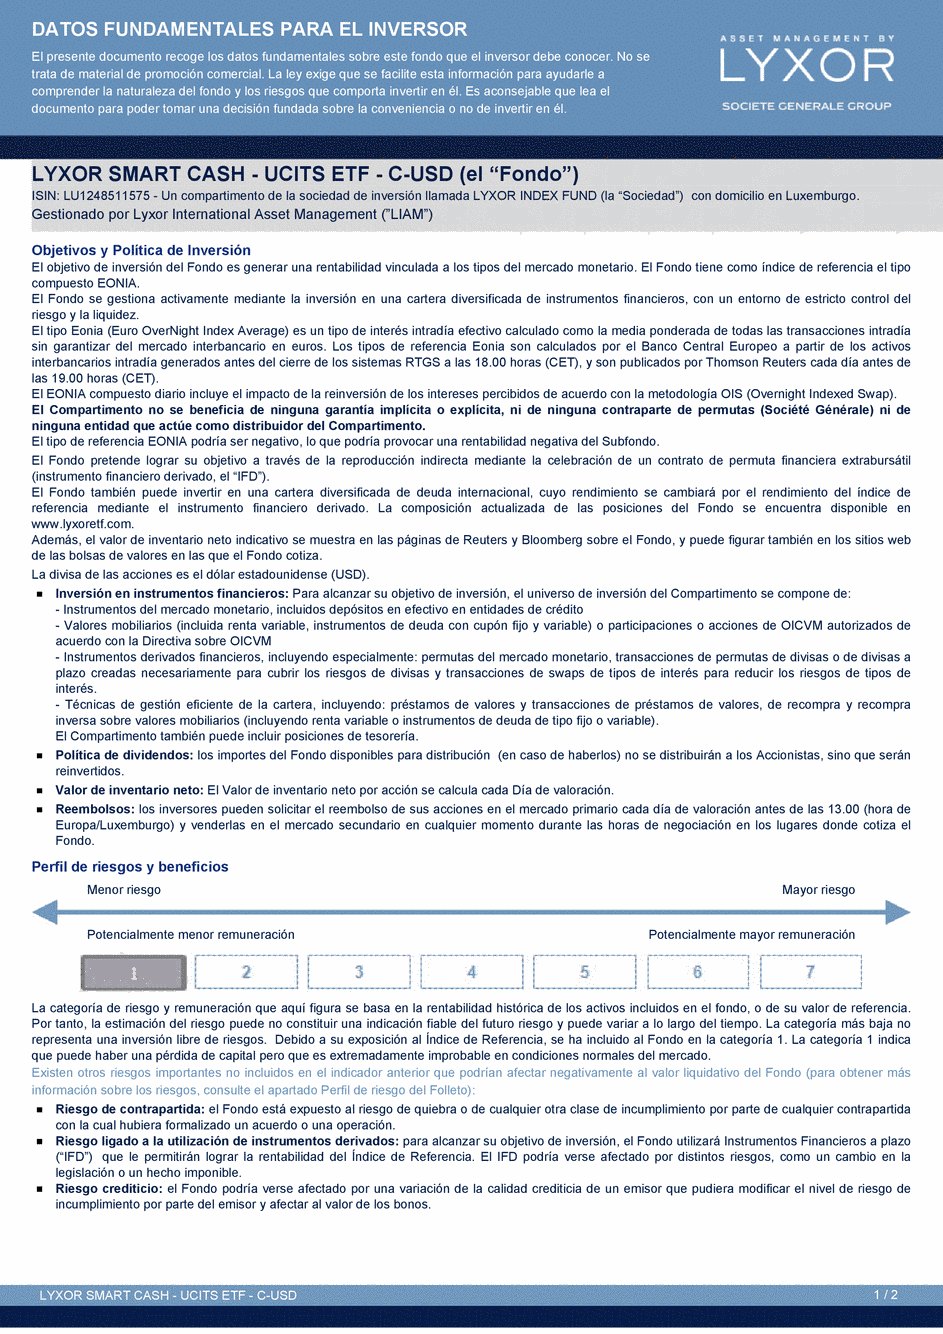 DICI Lyxor Smart Overnight Return - UCITS ETF C-USD - 30/06/2015 - Espagnol